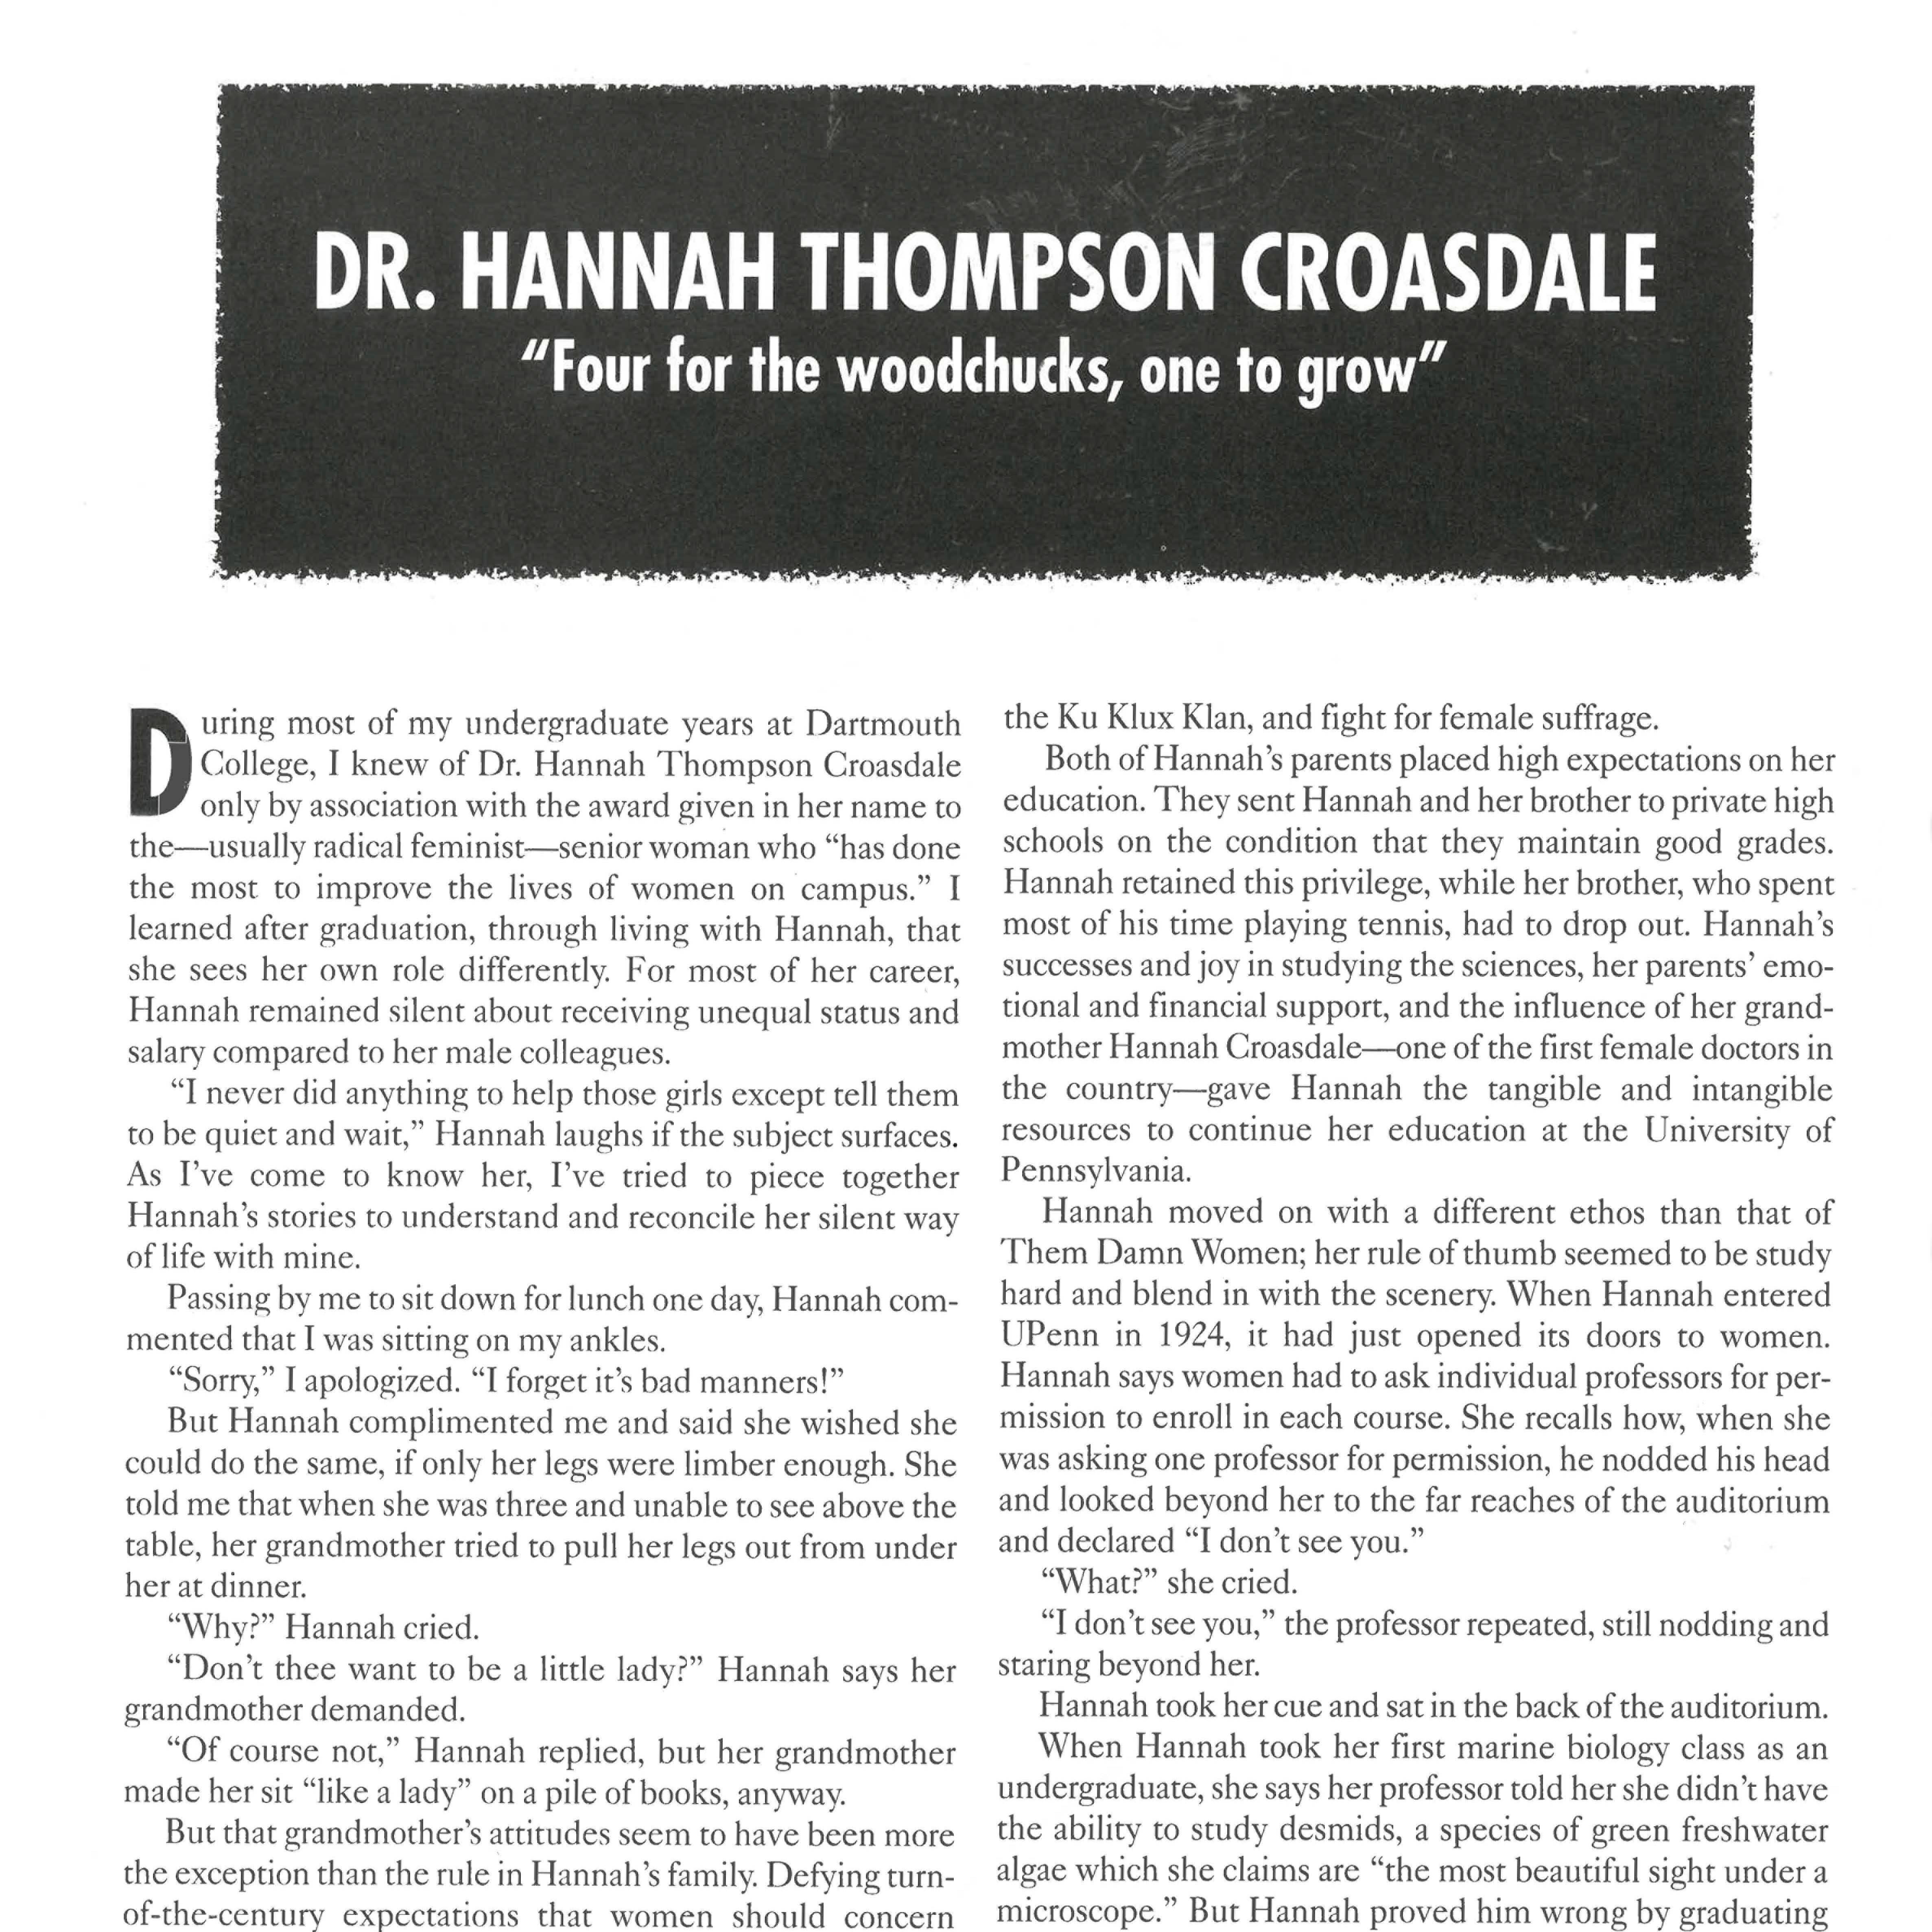 Dr. Hannah Thompson Croasdale: “Four for the woodchucks, one to grow”